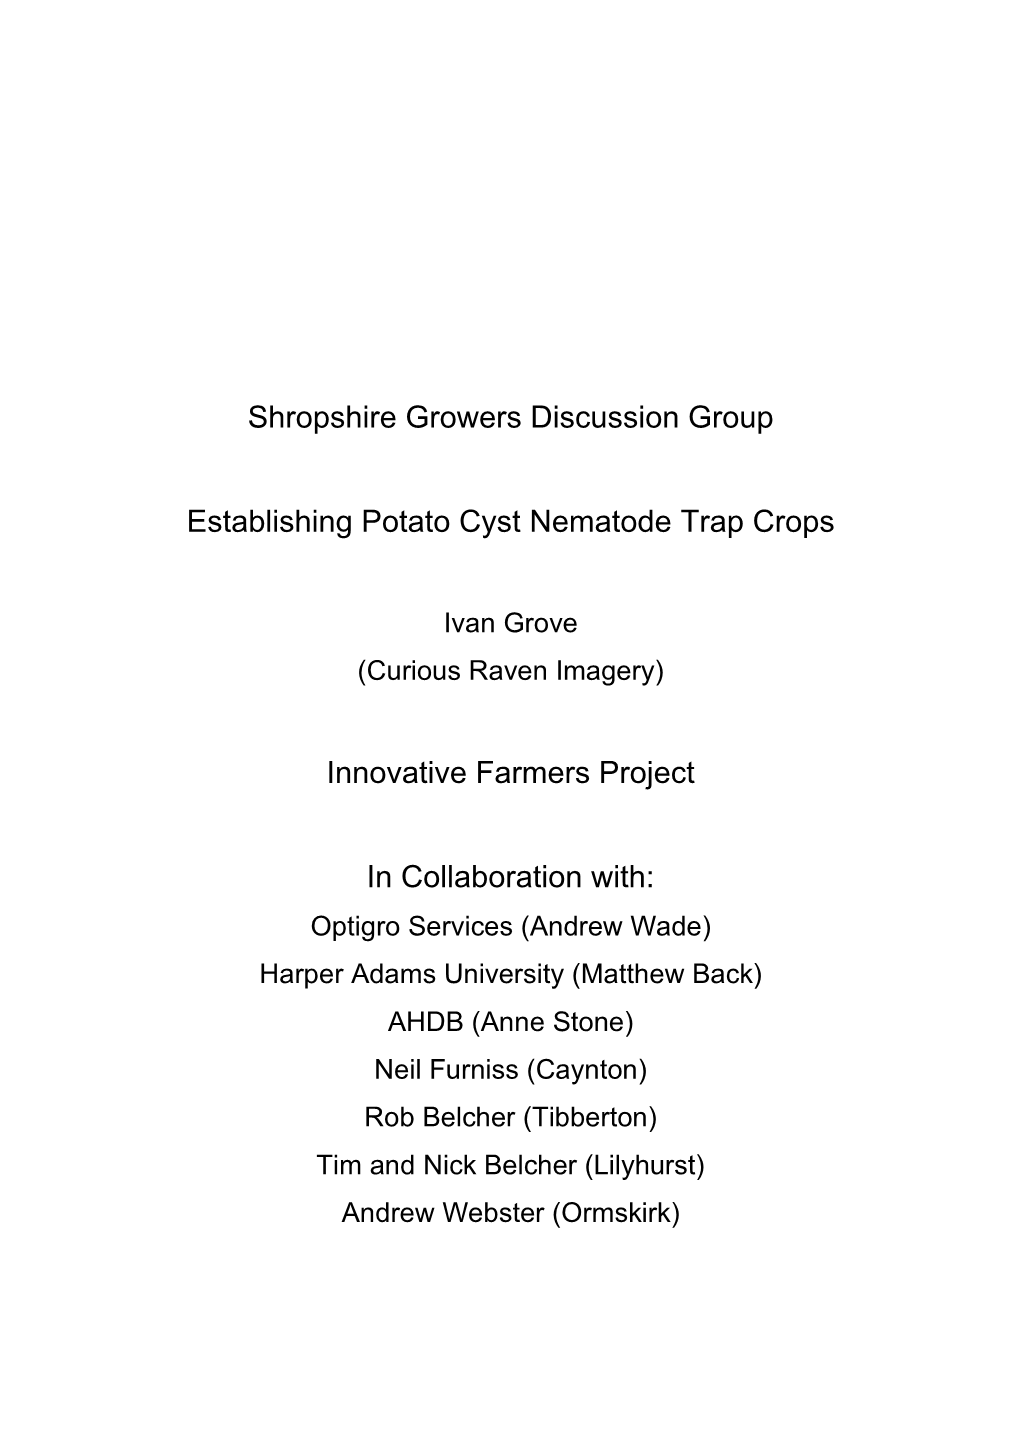 Shropshire Growers Discussion Group Establishing Potato Cyst